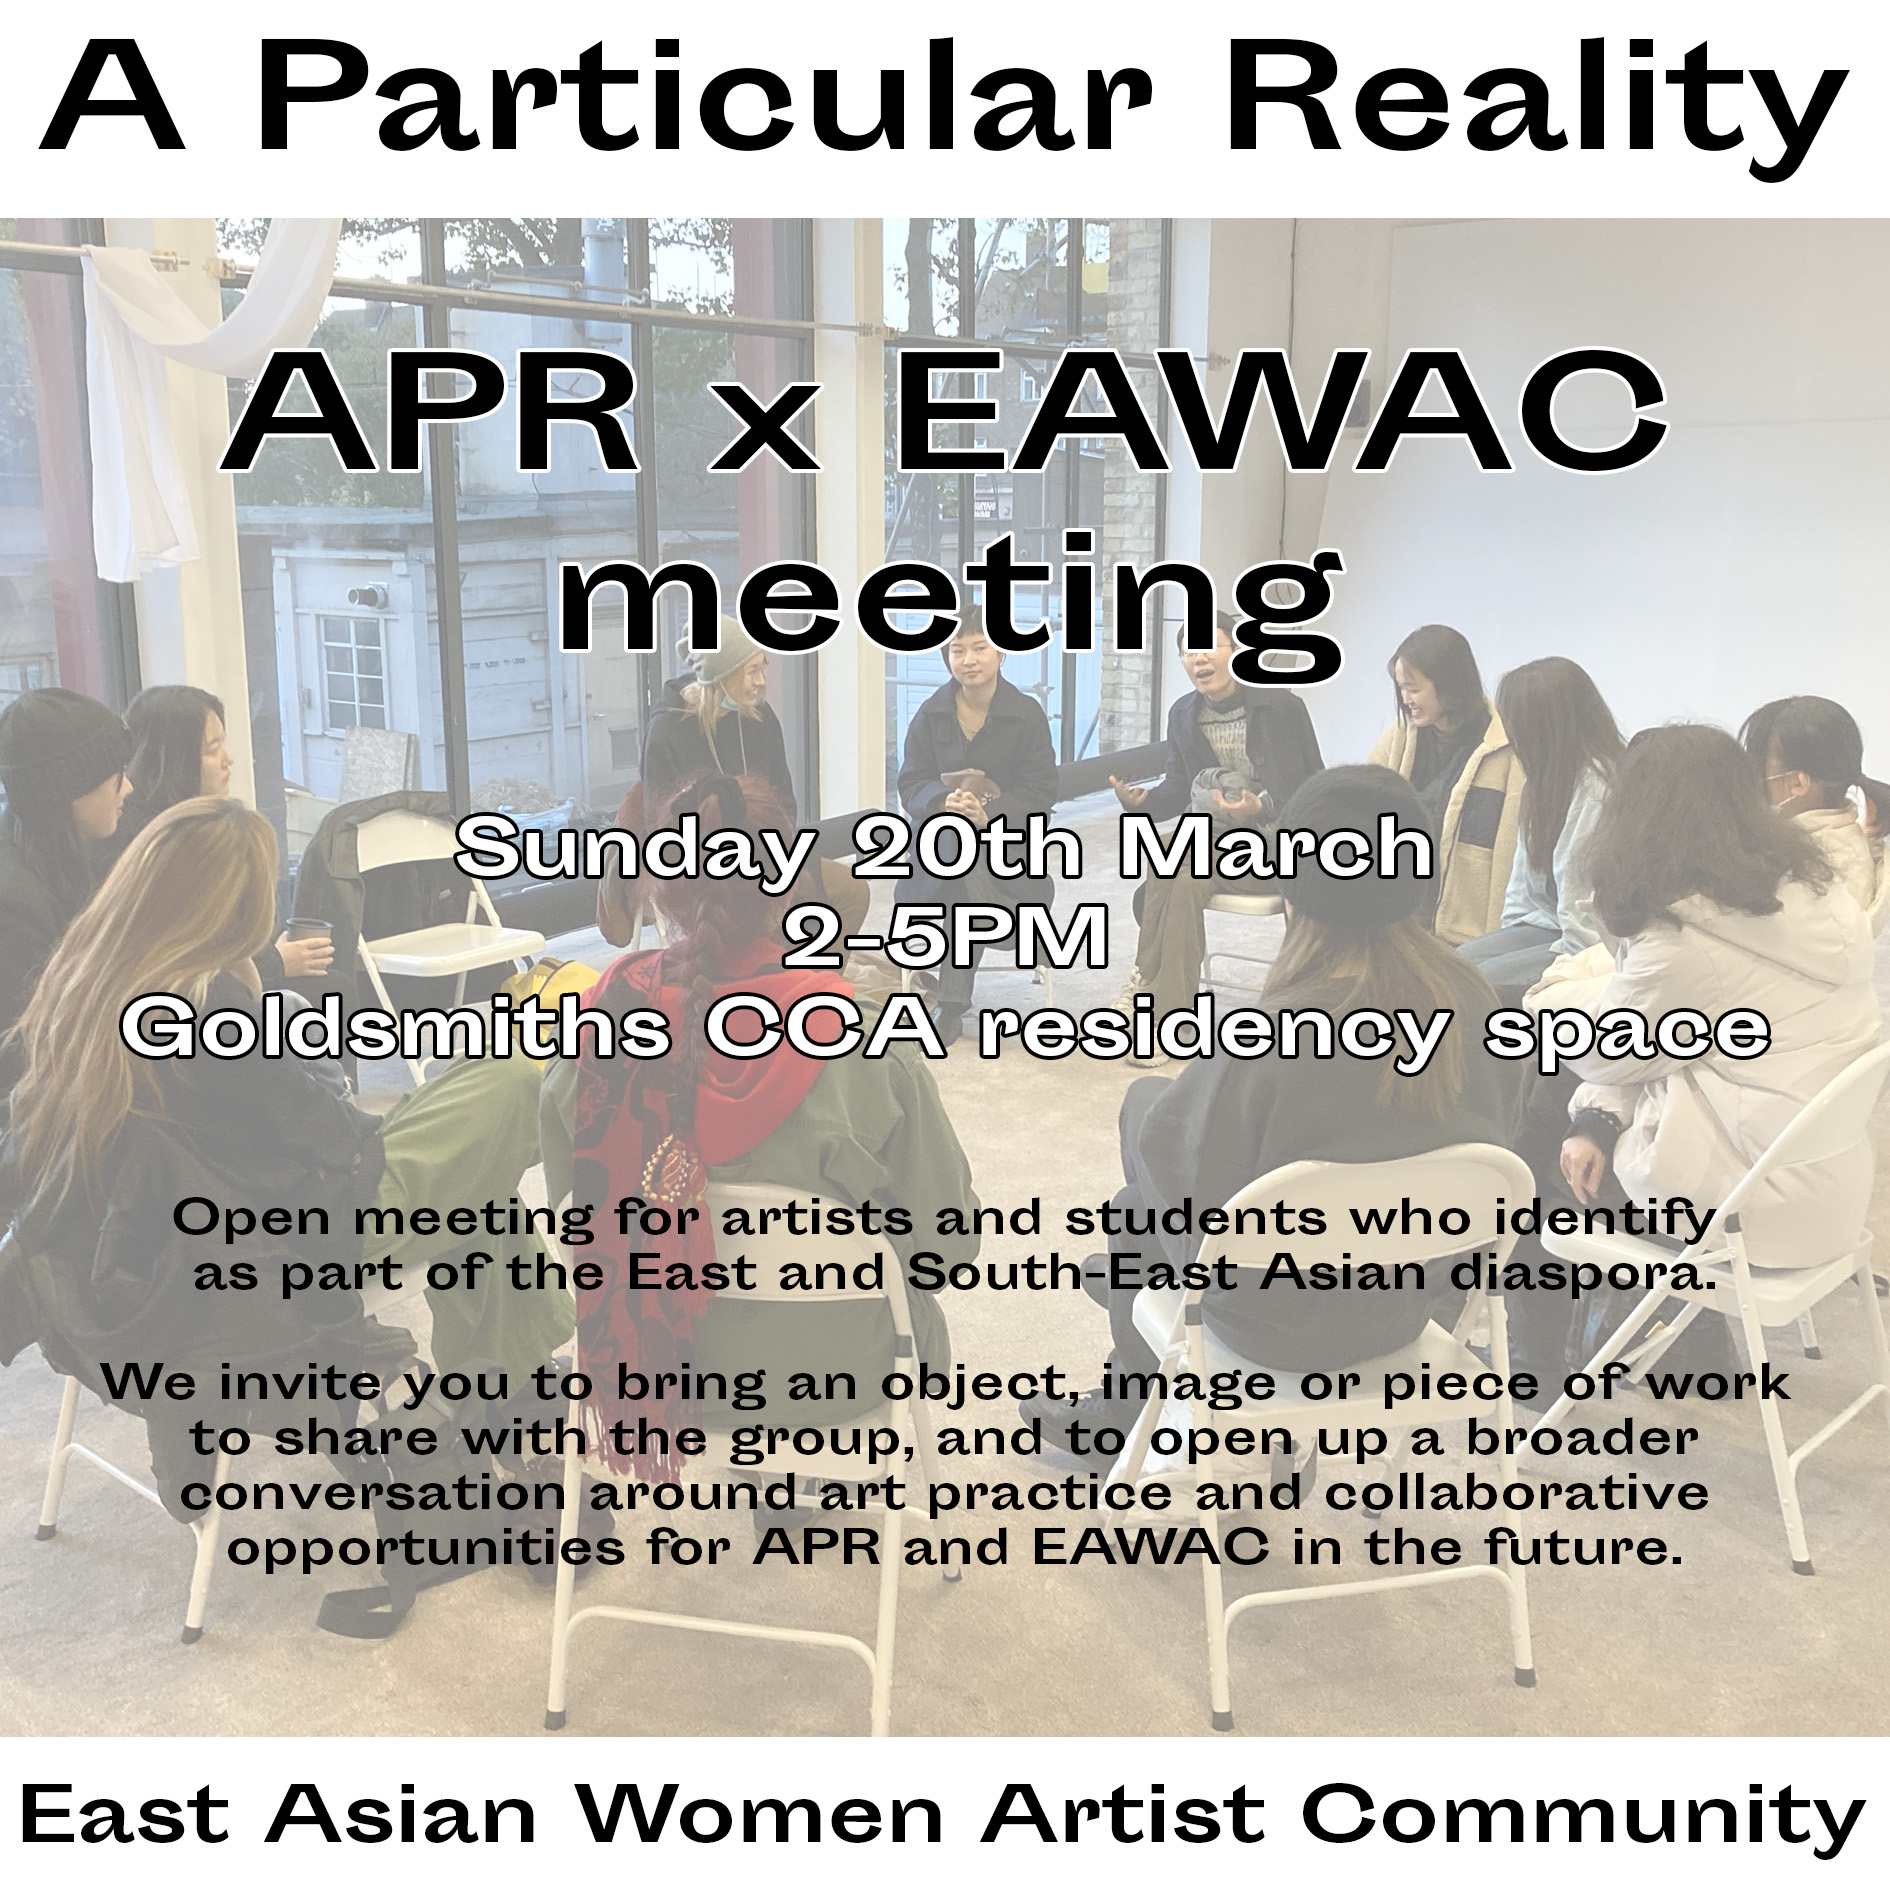 APR x EAWAC meeting at Goldsmiths CCA